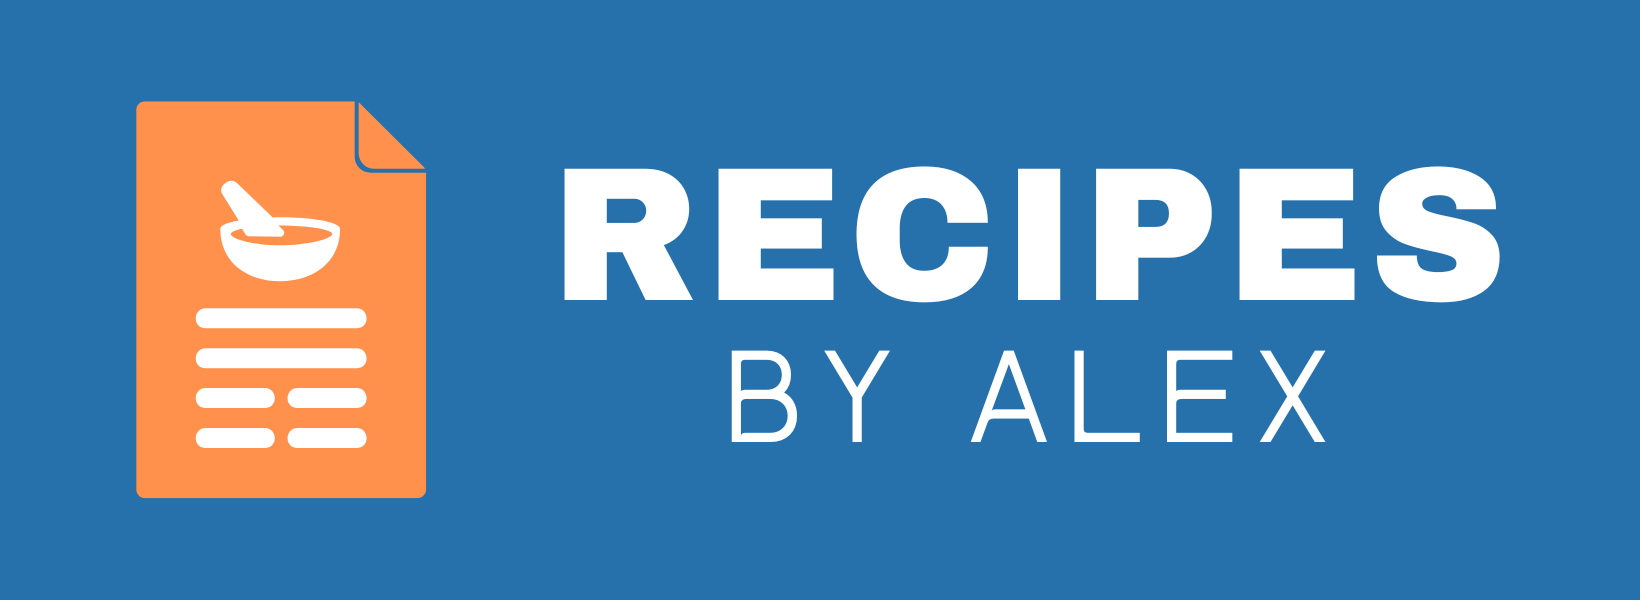 Recipes by Alex